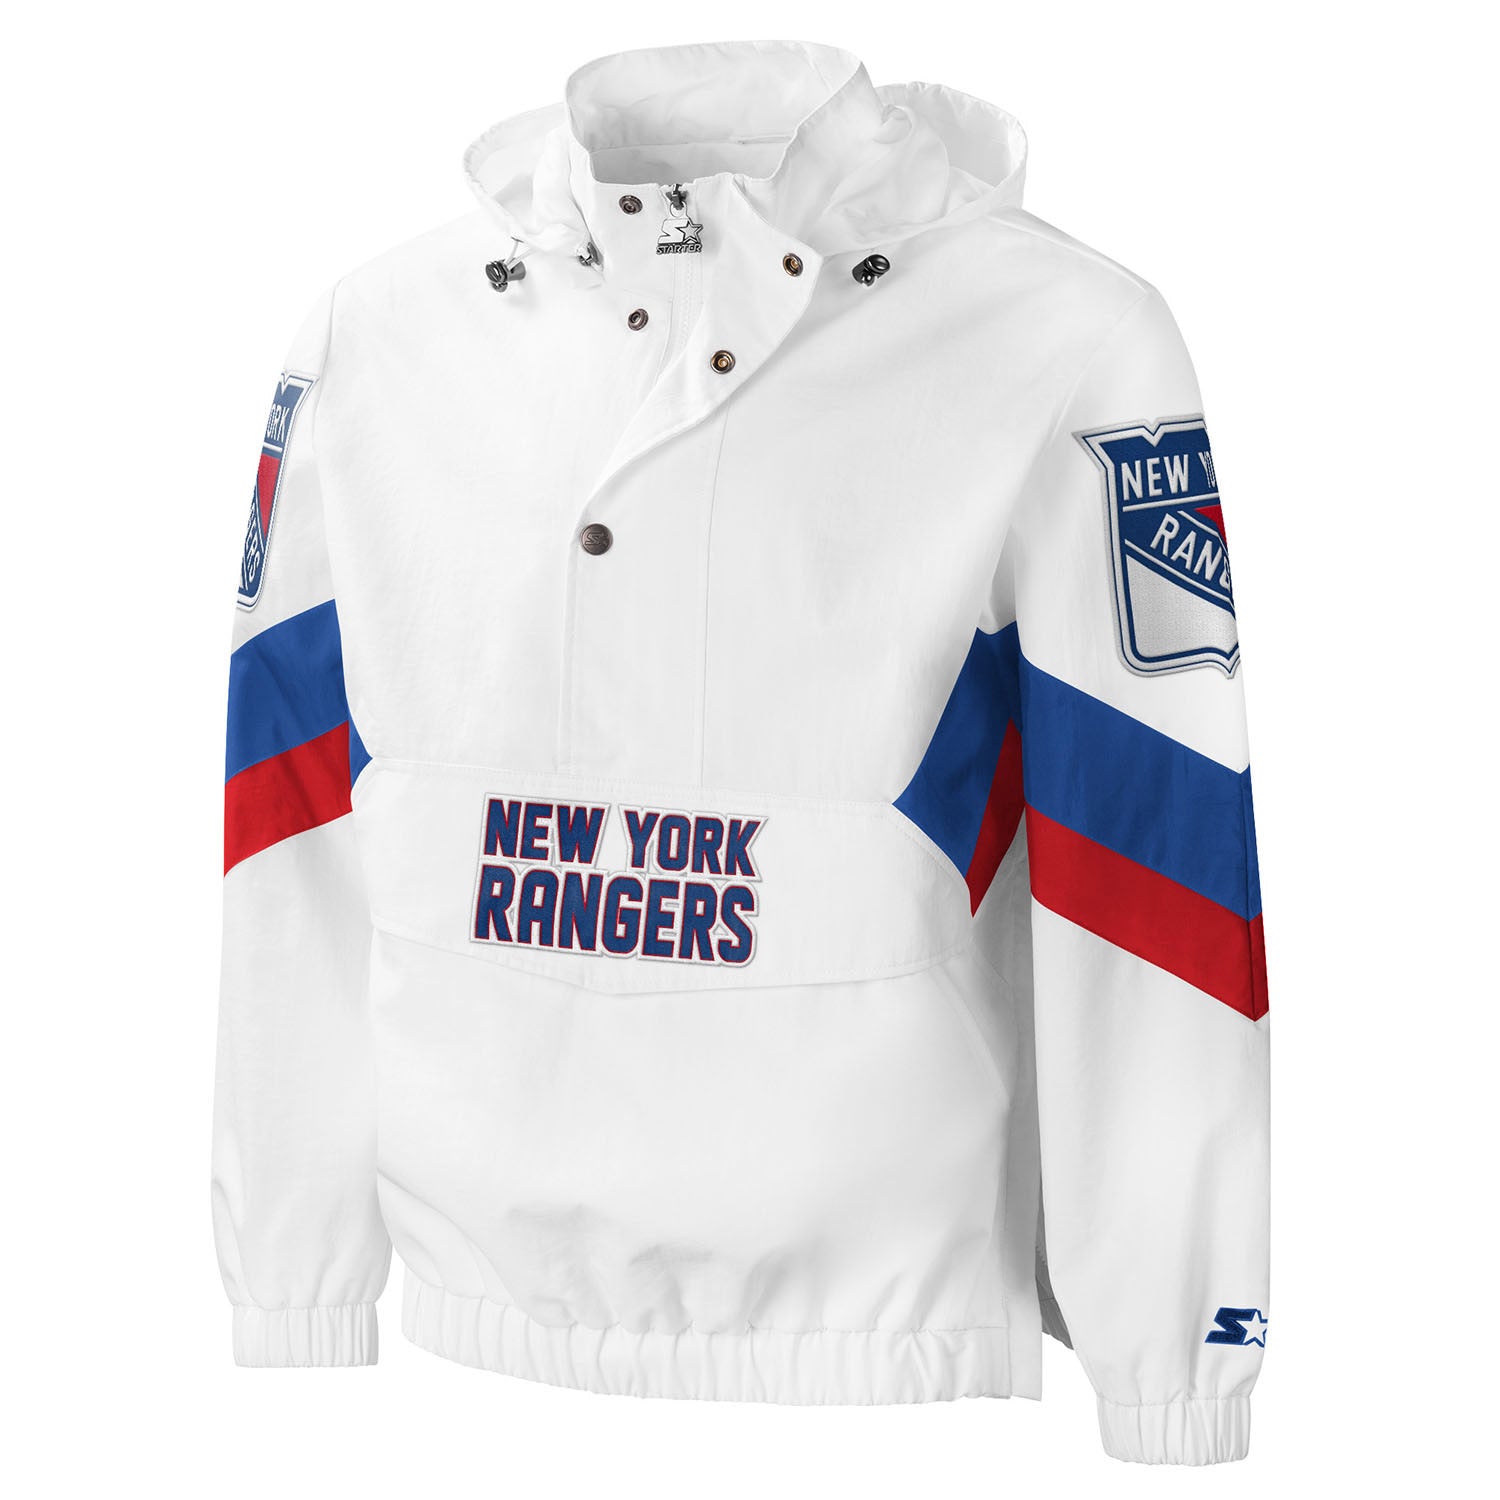 Vintage Rangers Jacket